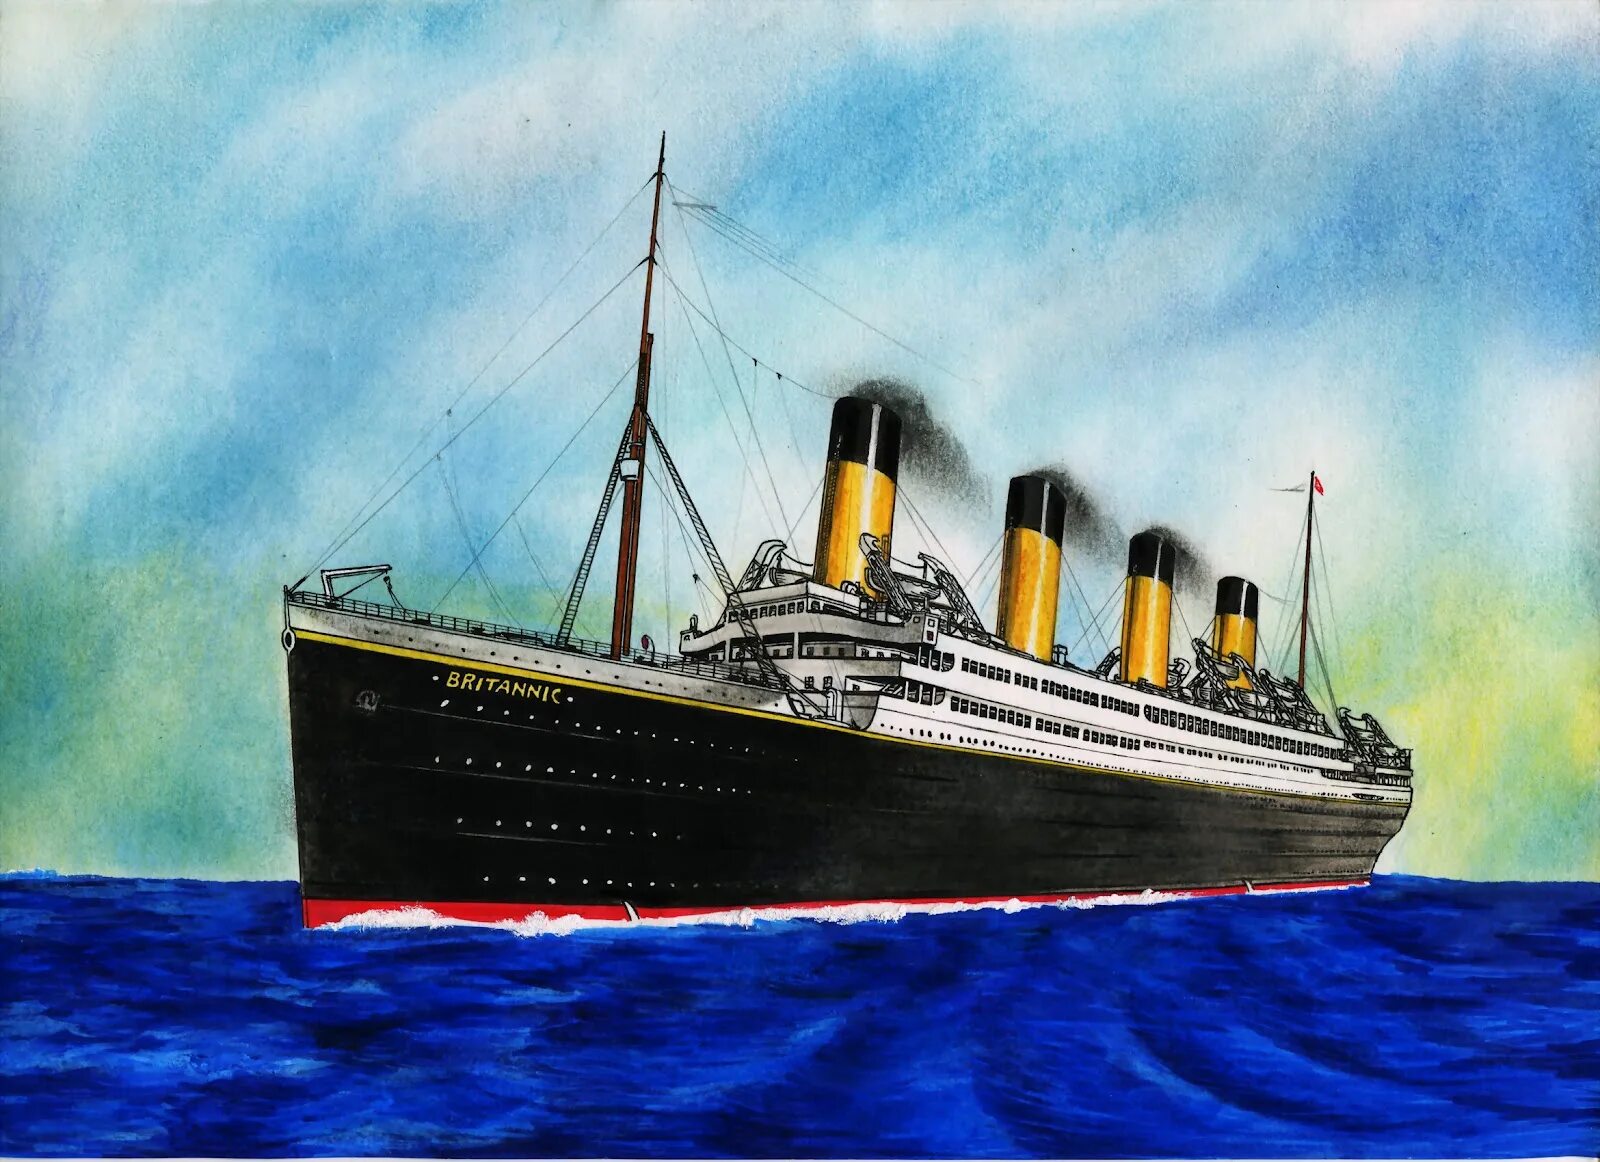 Олимпик Титаник Британик. Корабли Титаник Британик и Олимпик. Британик RMS. Британик корабль крушение.